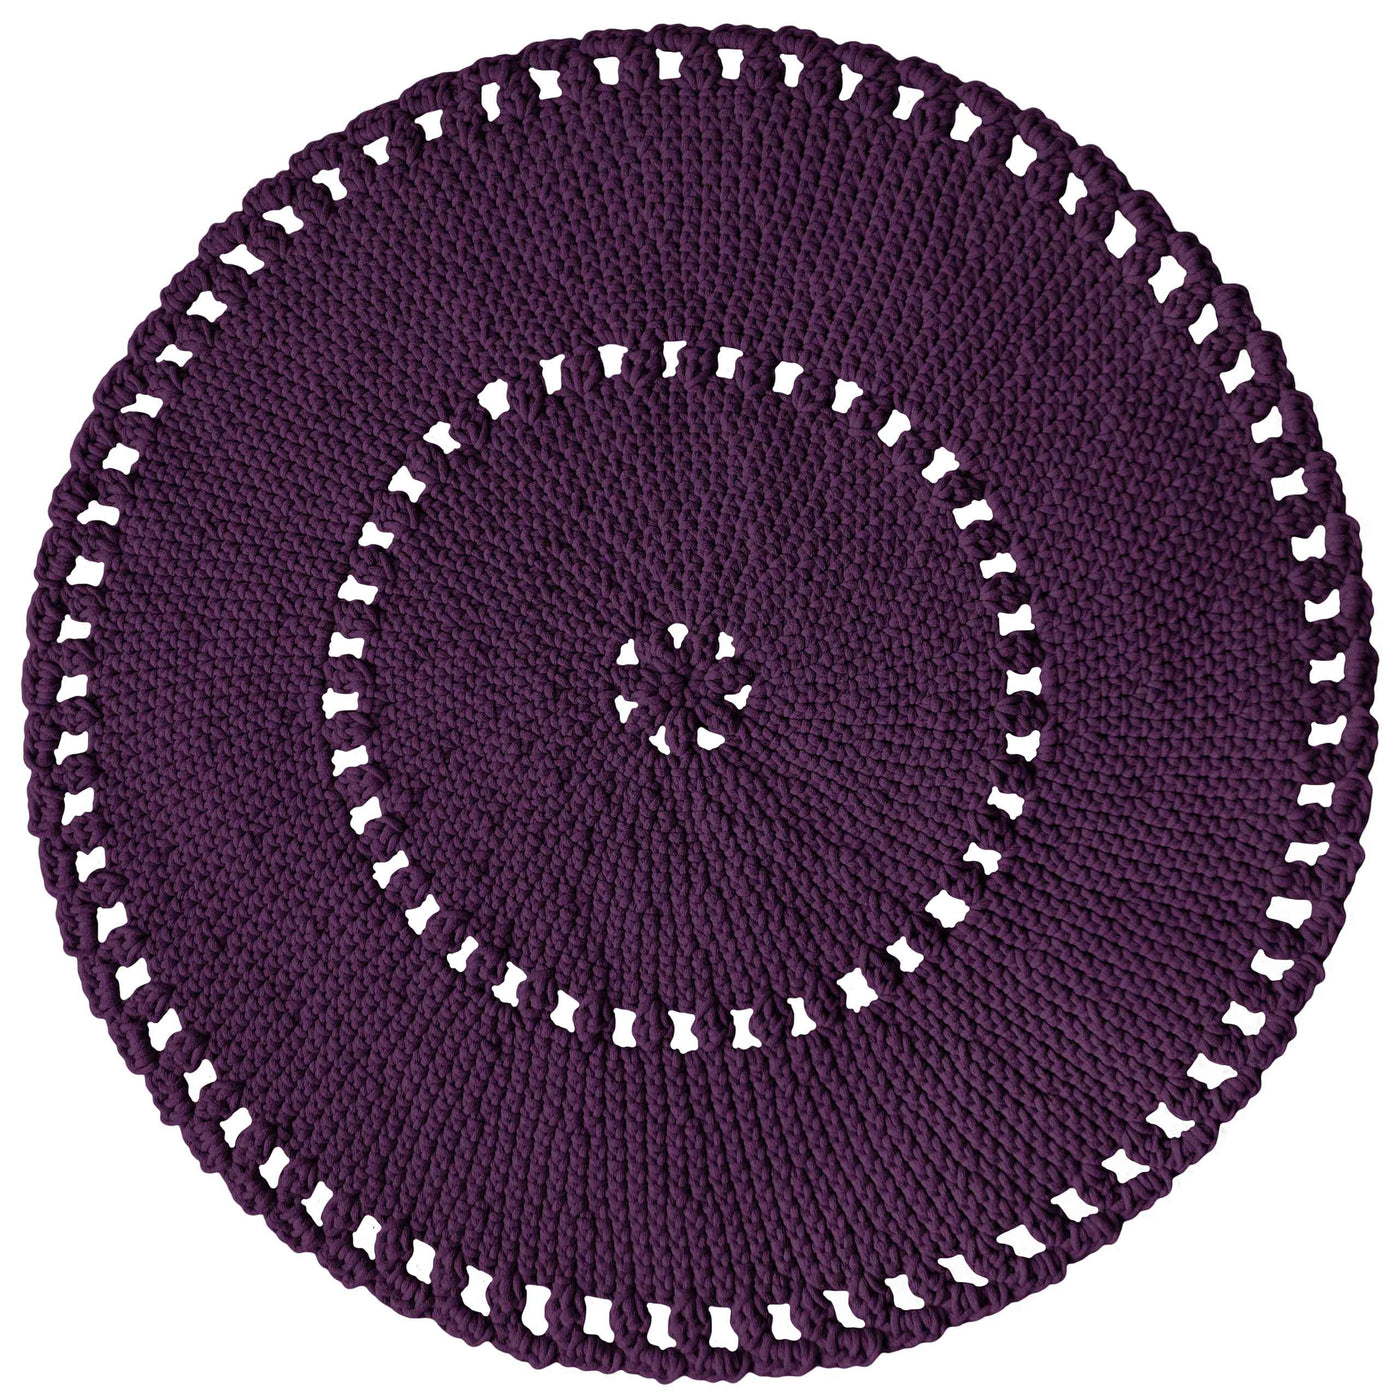 Crochet Boho Rug | Aubergine-vendor-unknown-Yes Bebe